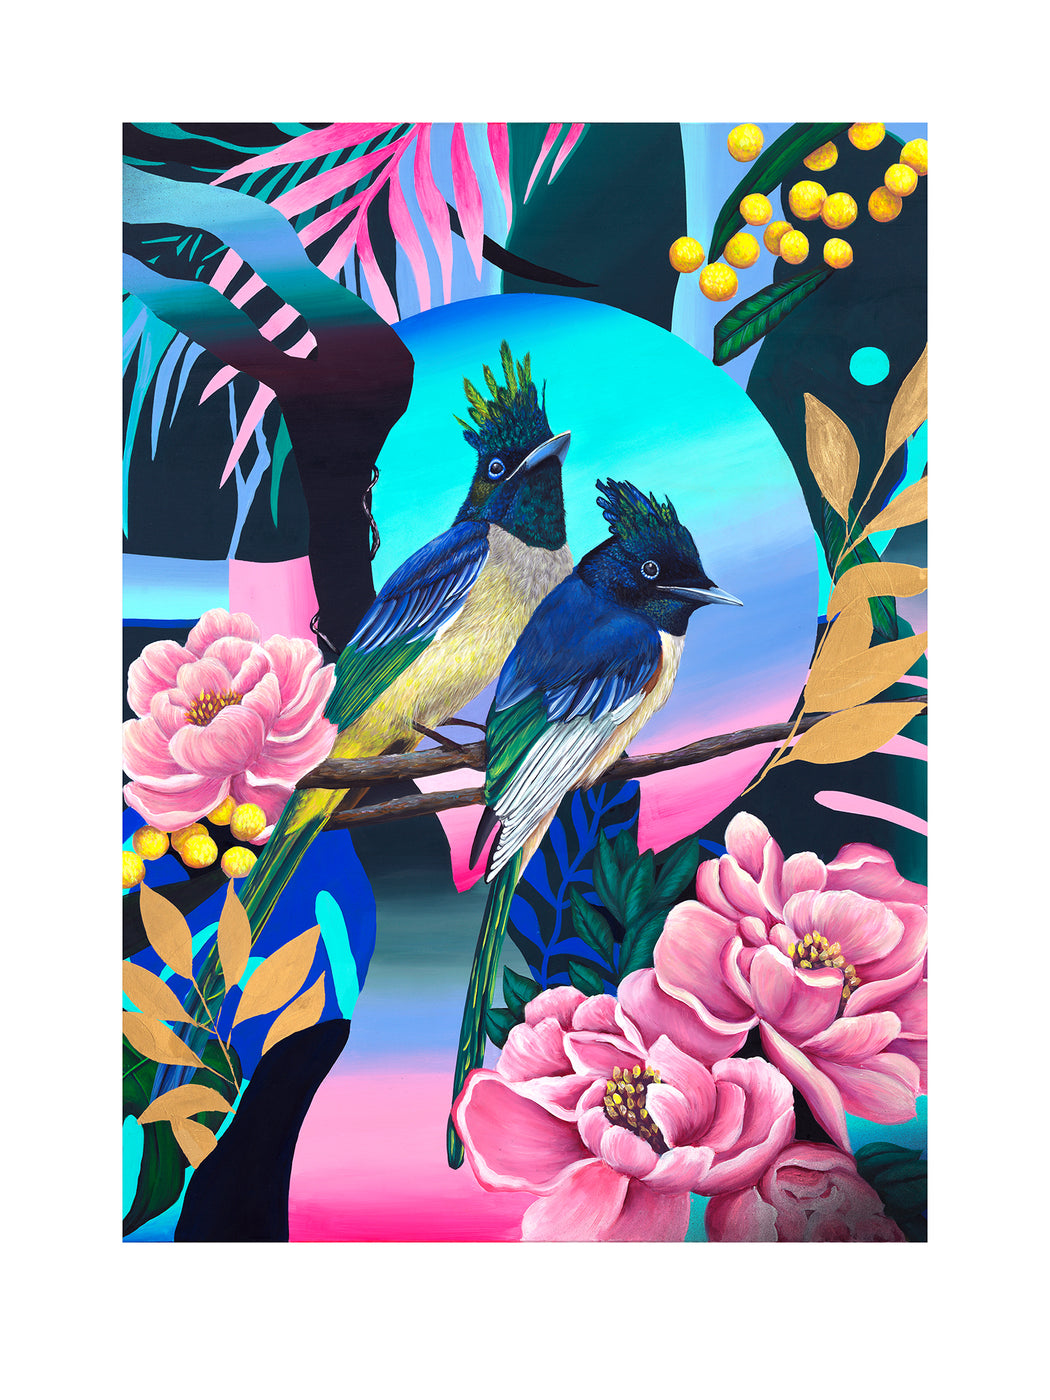 Nashira – Irene Lopez Leon – Artscape Warehouse – Street art print – Urban art print for sale – Limited edition street art print